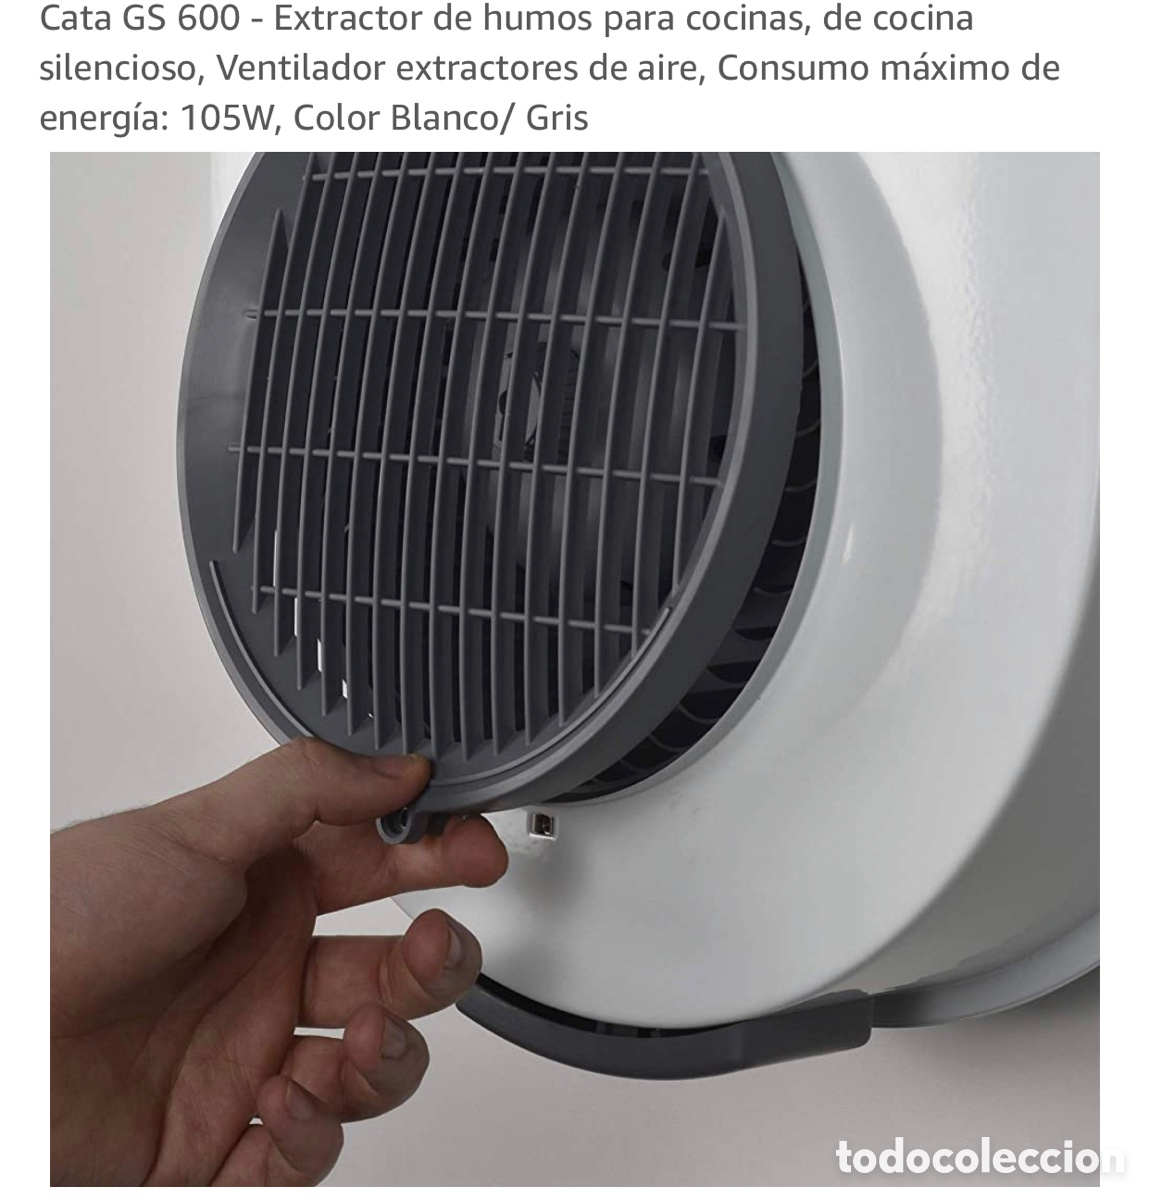 extractor de humos aire cocina silencioso cata - Buy Antique home and  kitchen utensils on todocoleccion